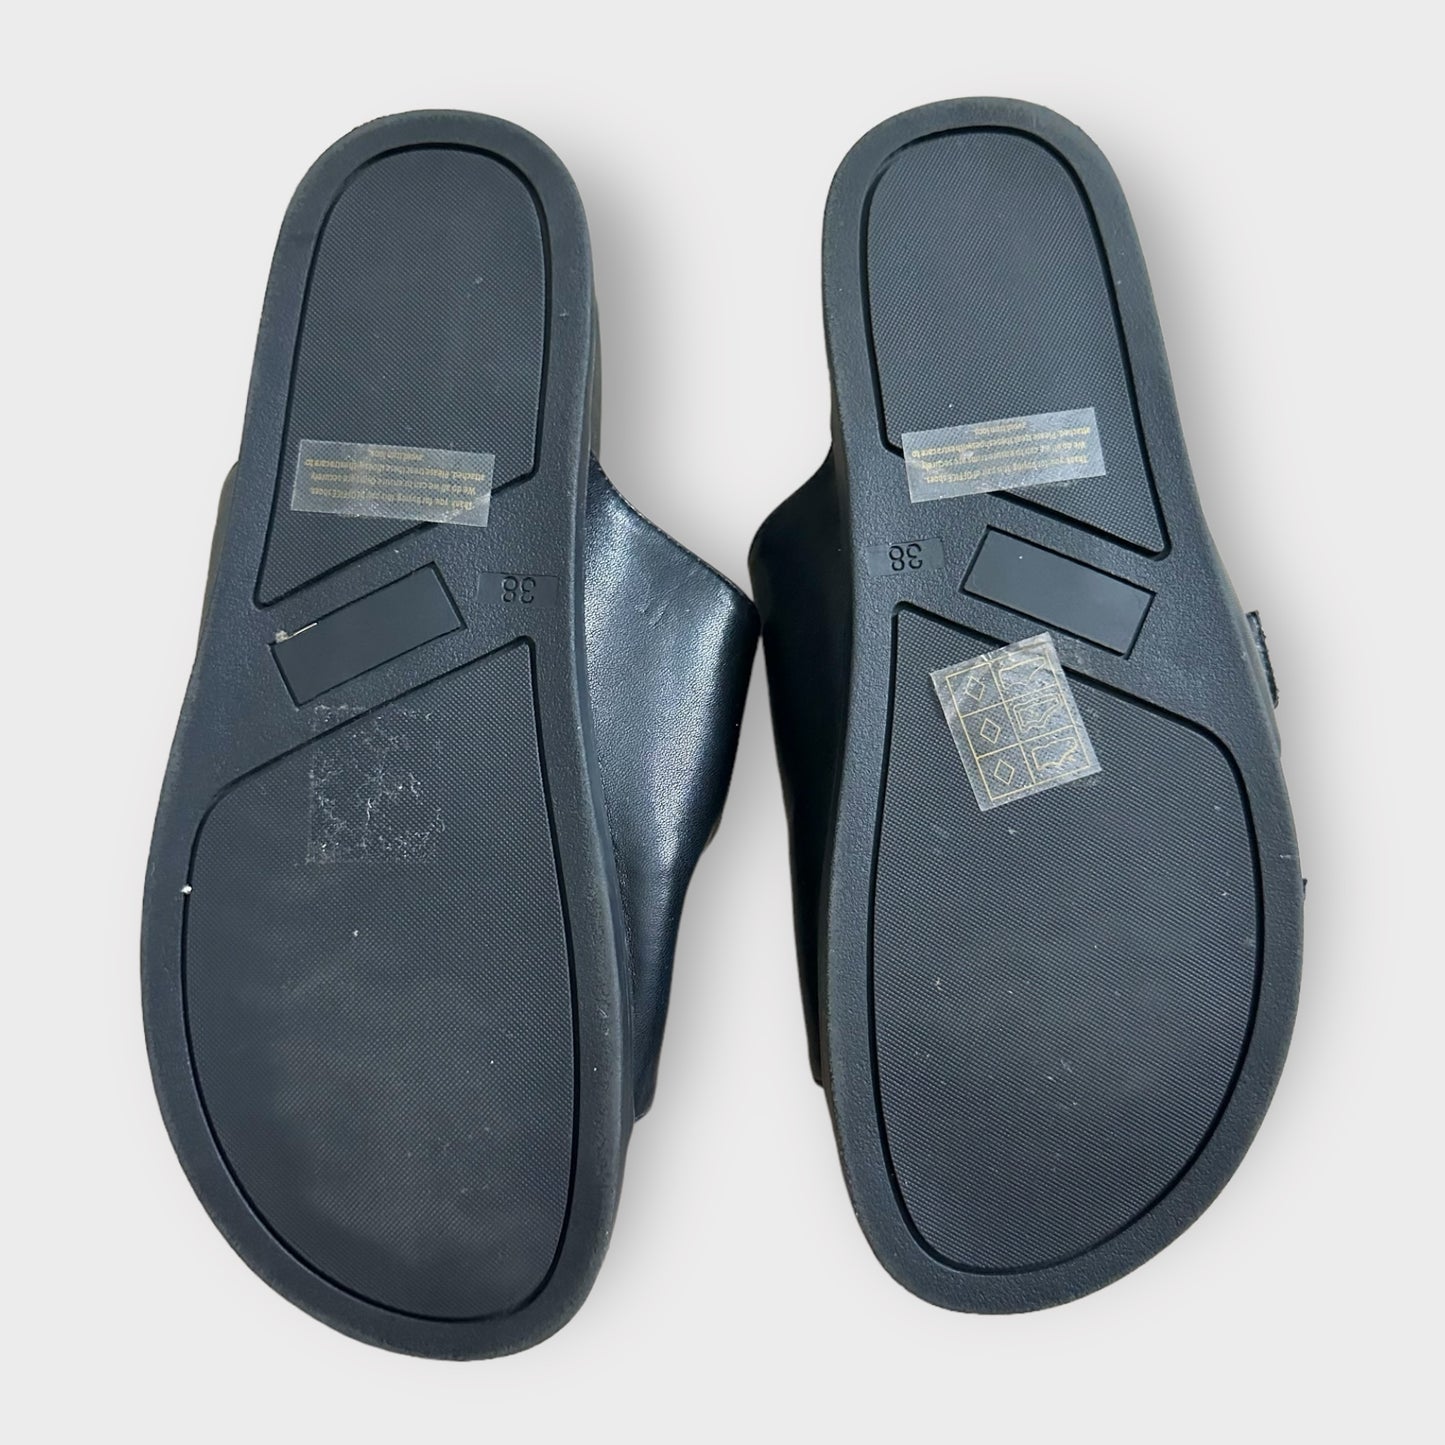 Office black cushioned sliders sandals flip flops new EU 38 UK 5 new bnwot